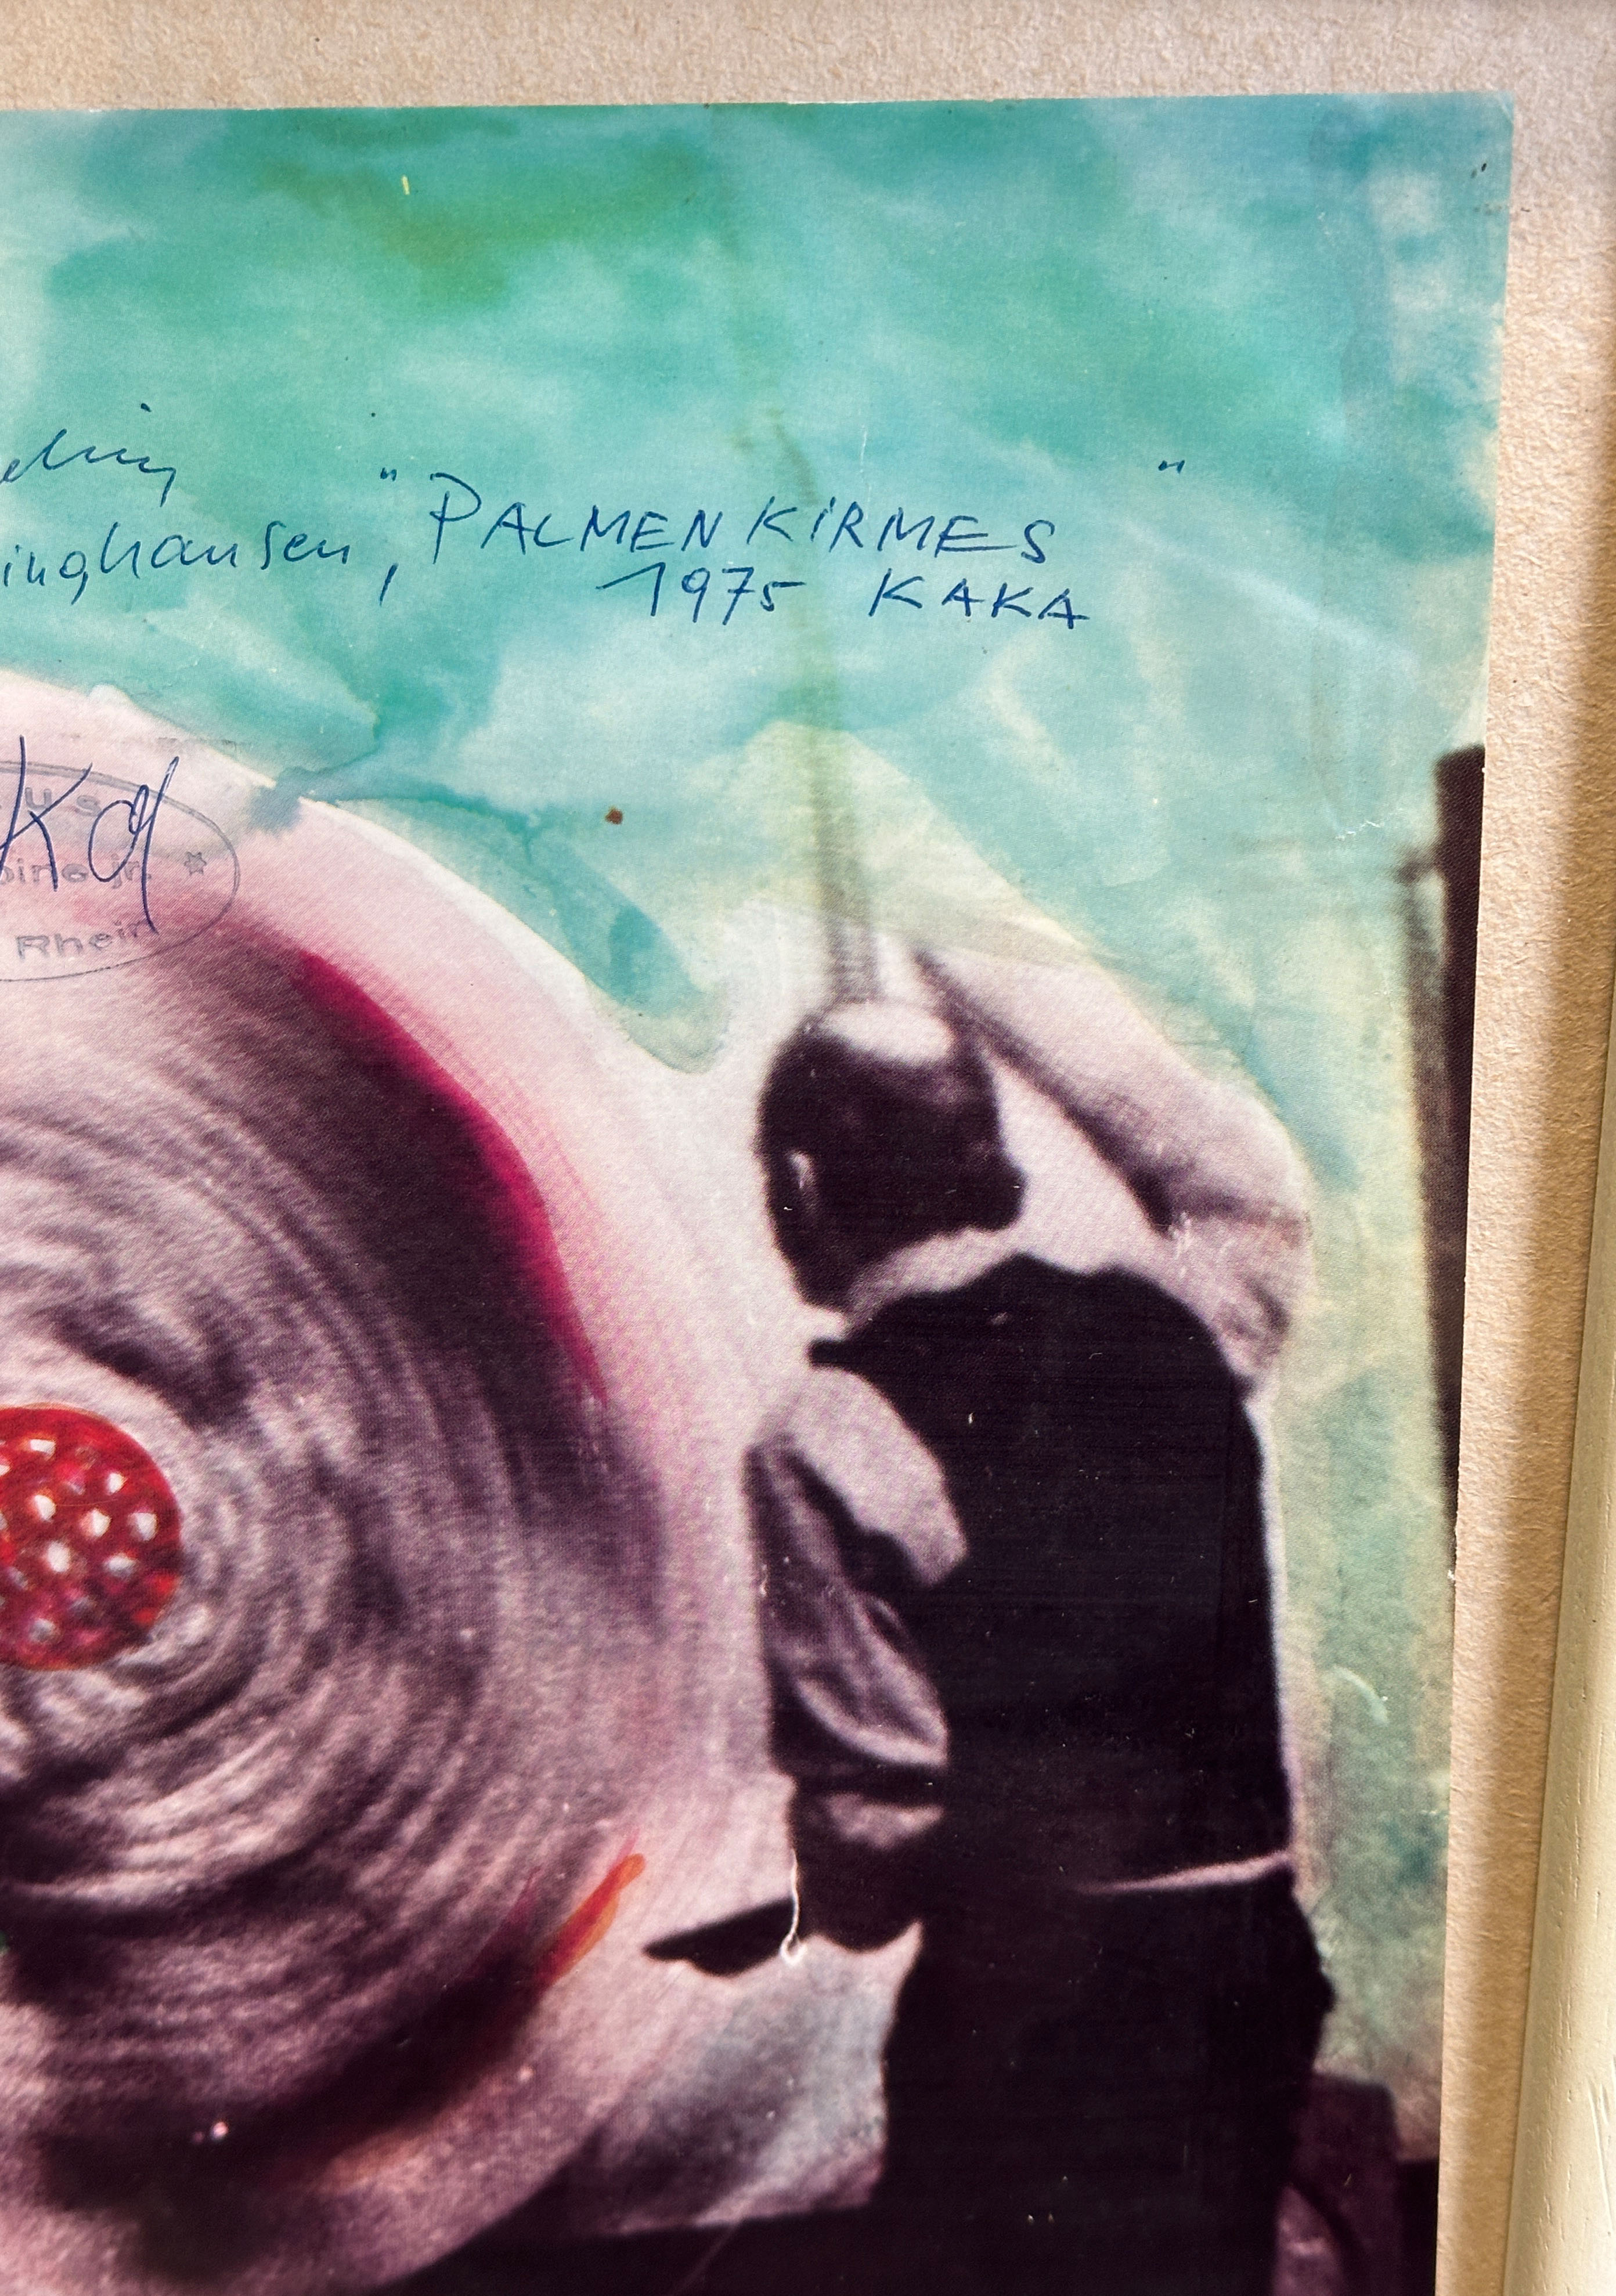 Sigmar POLKE (1941 - 2020). Poster. "Knife thrower". 1975. - Image 4 of 8